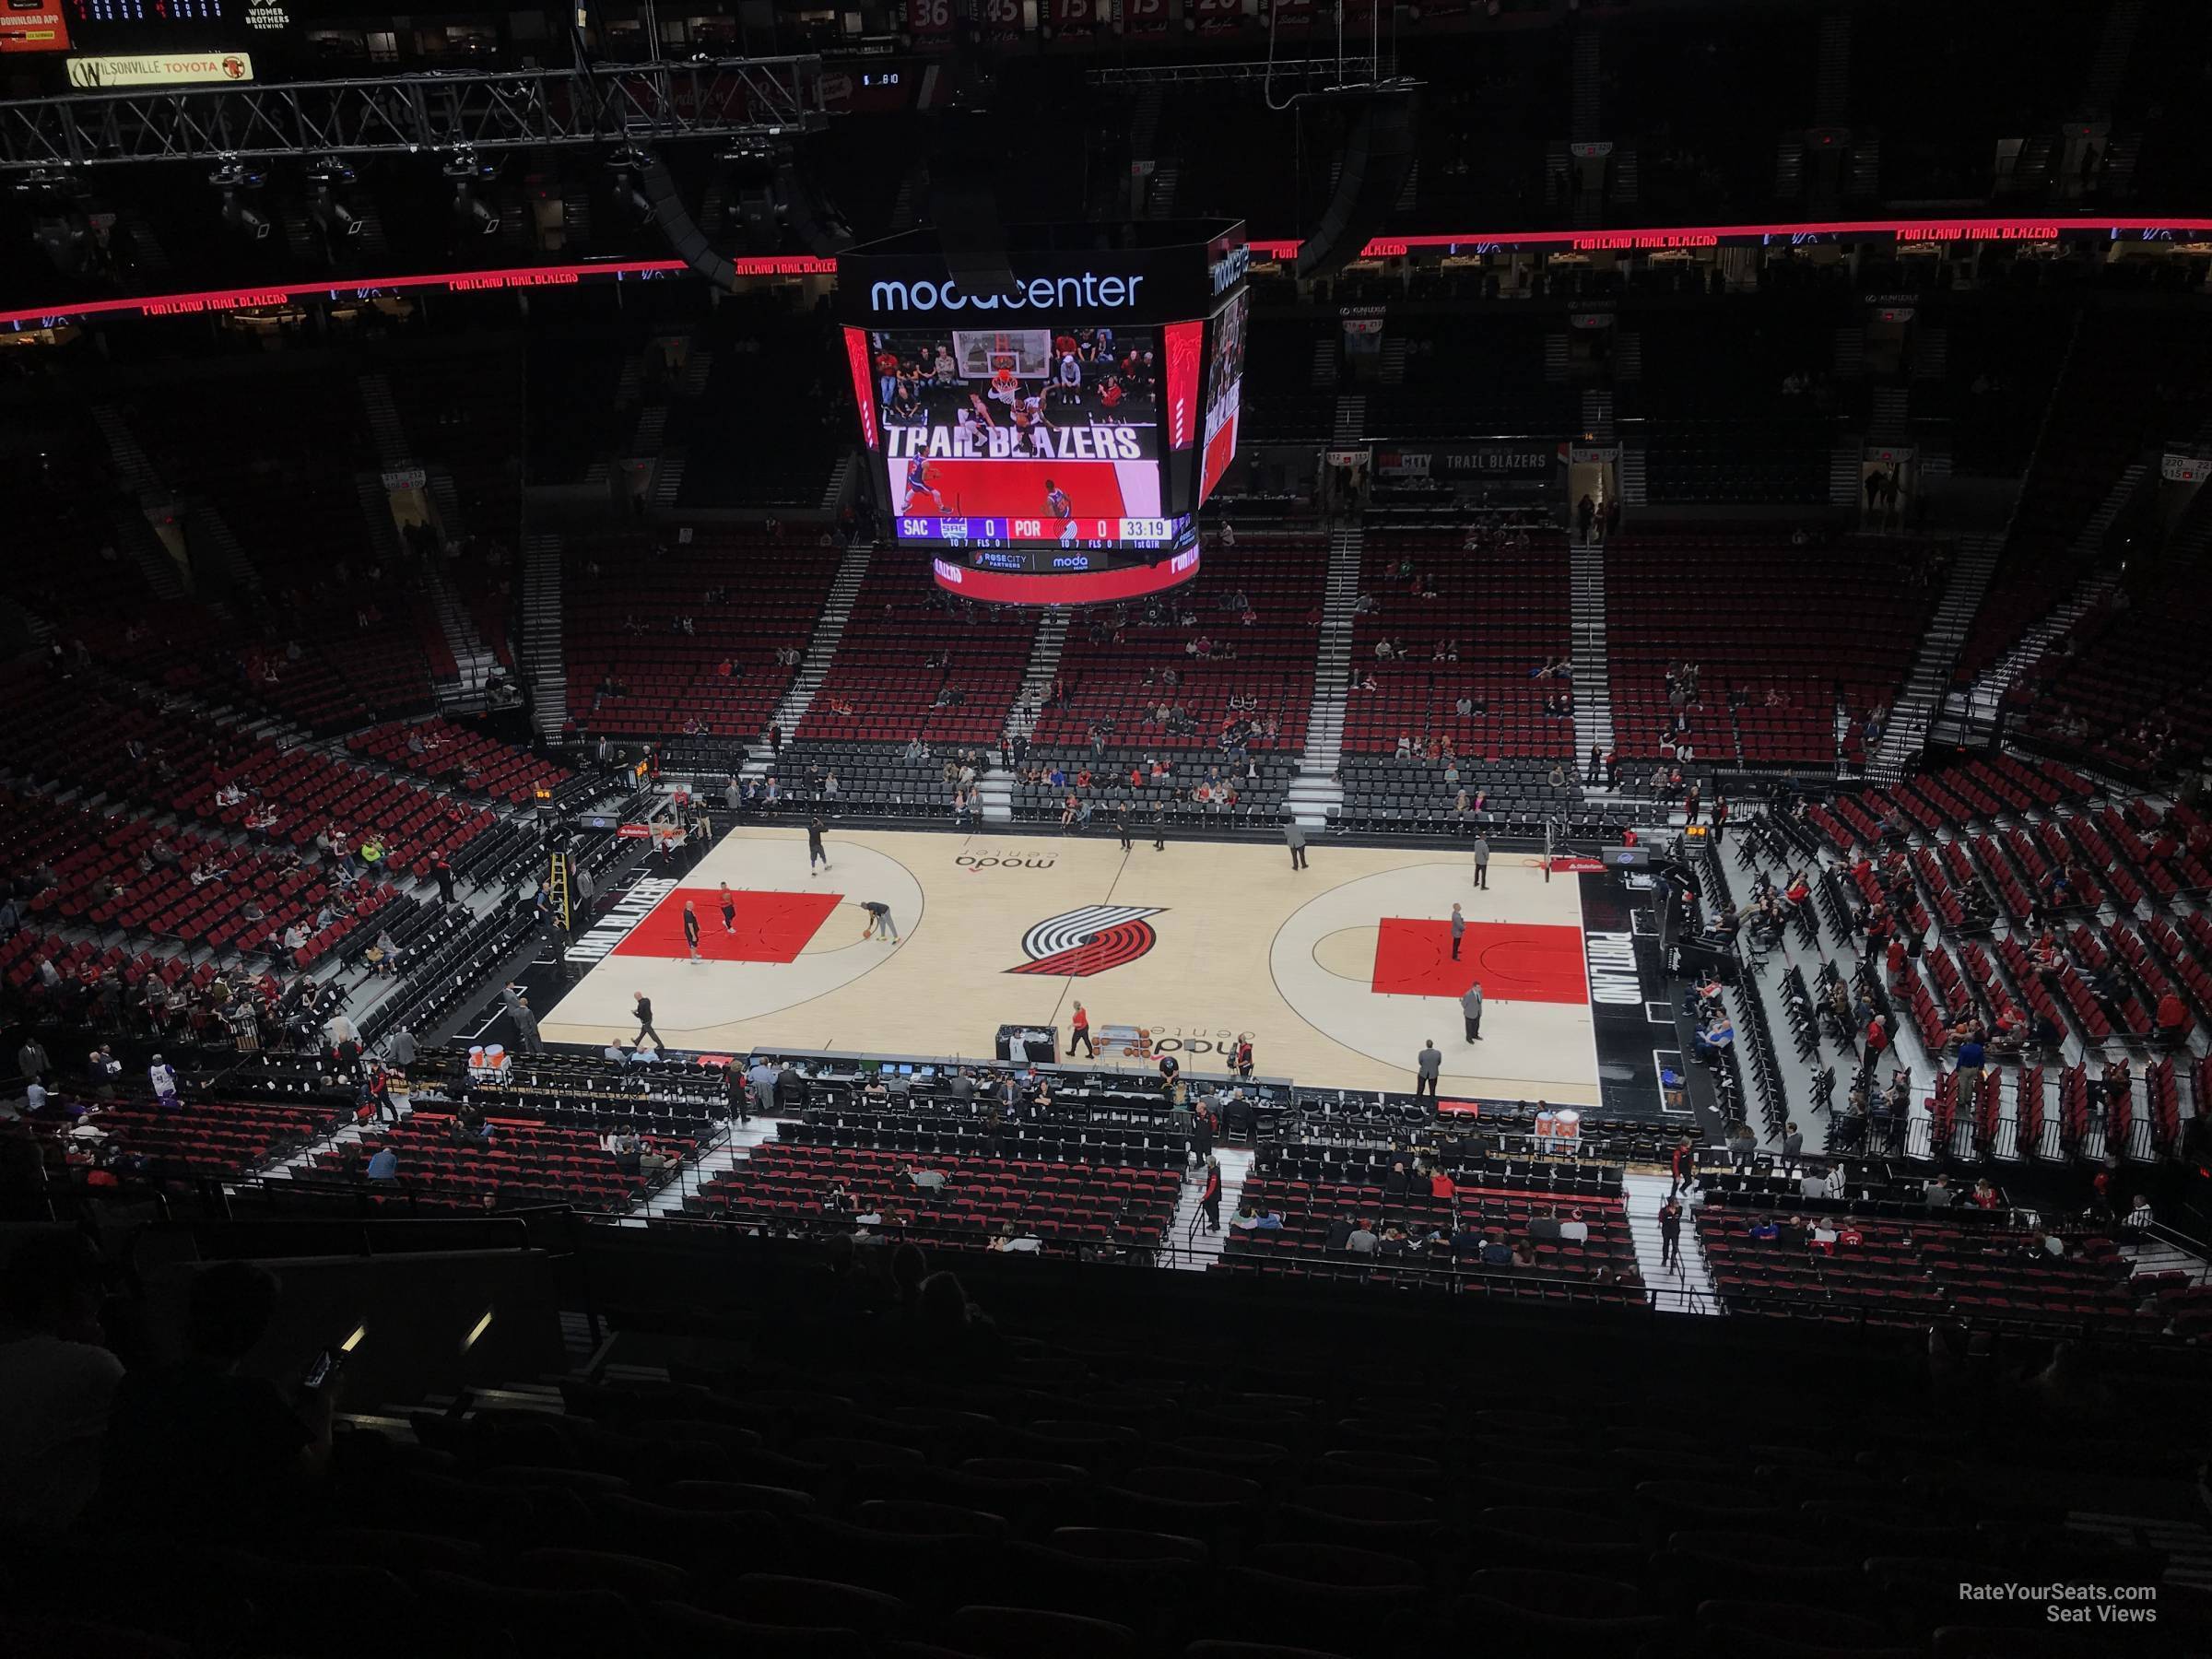 section 334, row l seat view  for basketball - moda center (rose garden)